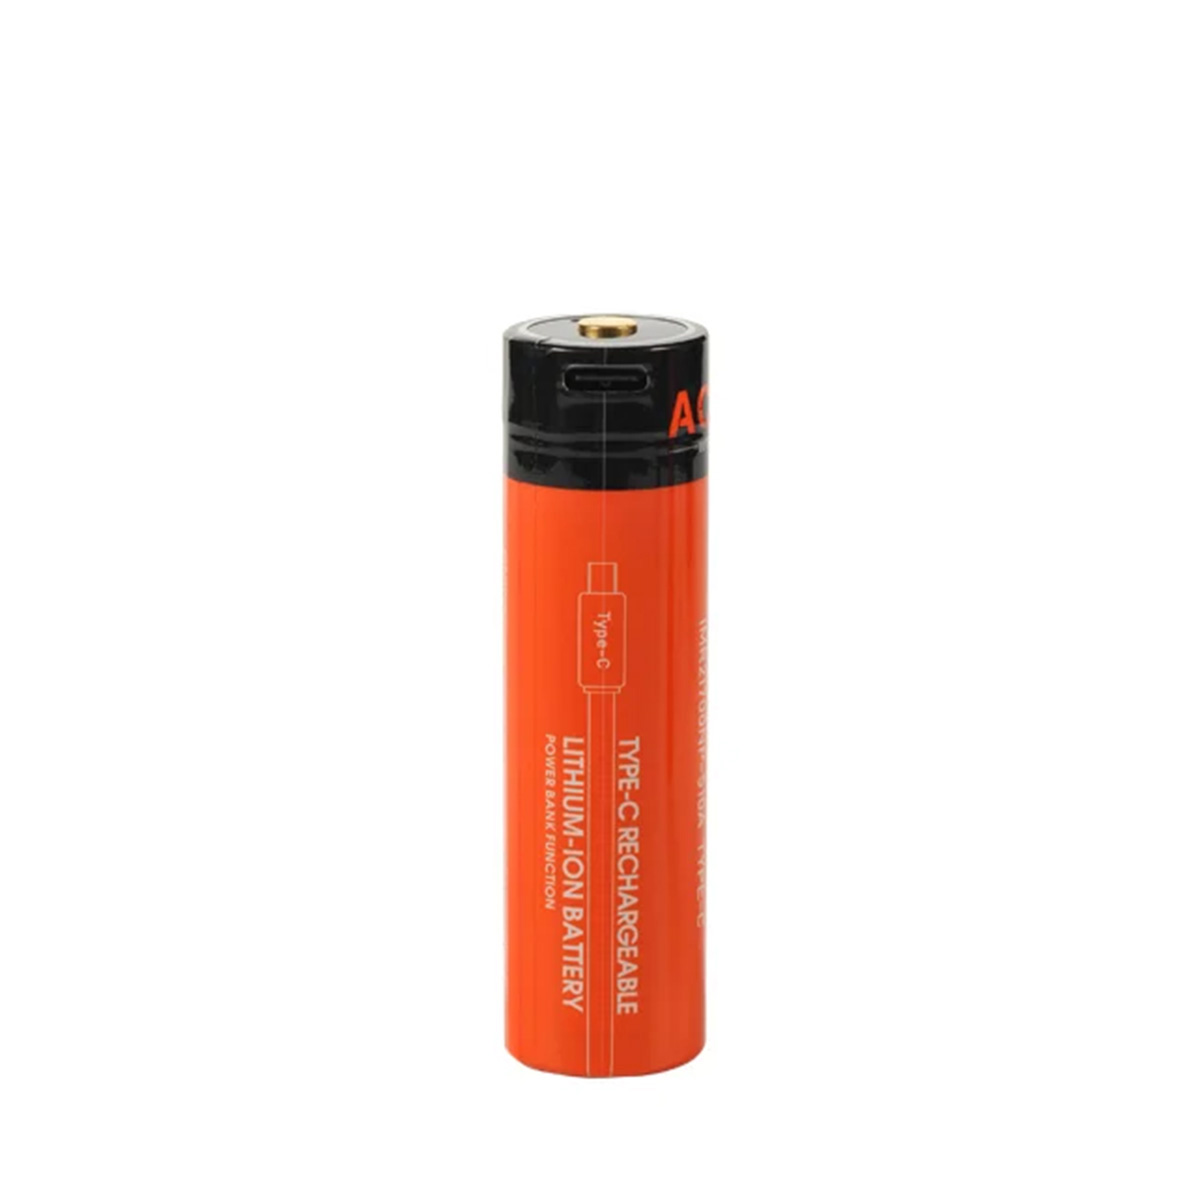 Acebeam 21700 Li-ion USB-C Rechargeable Battery 5100mAh